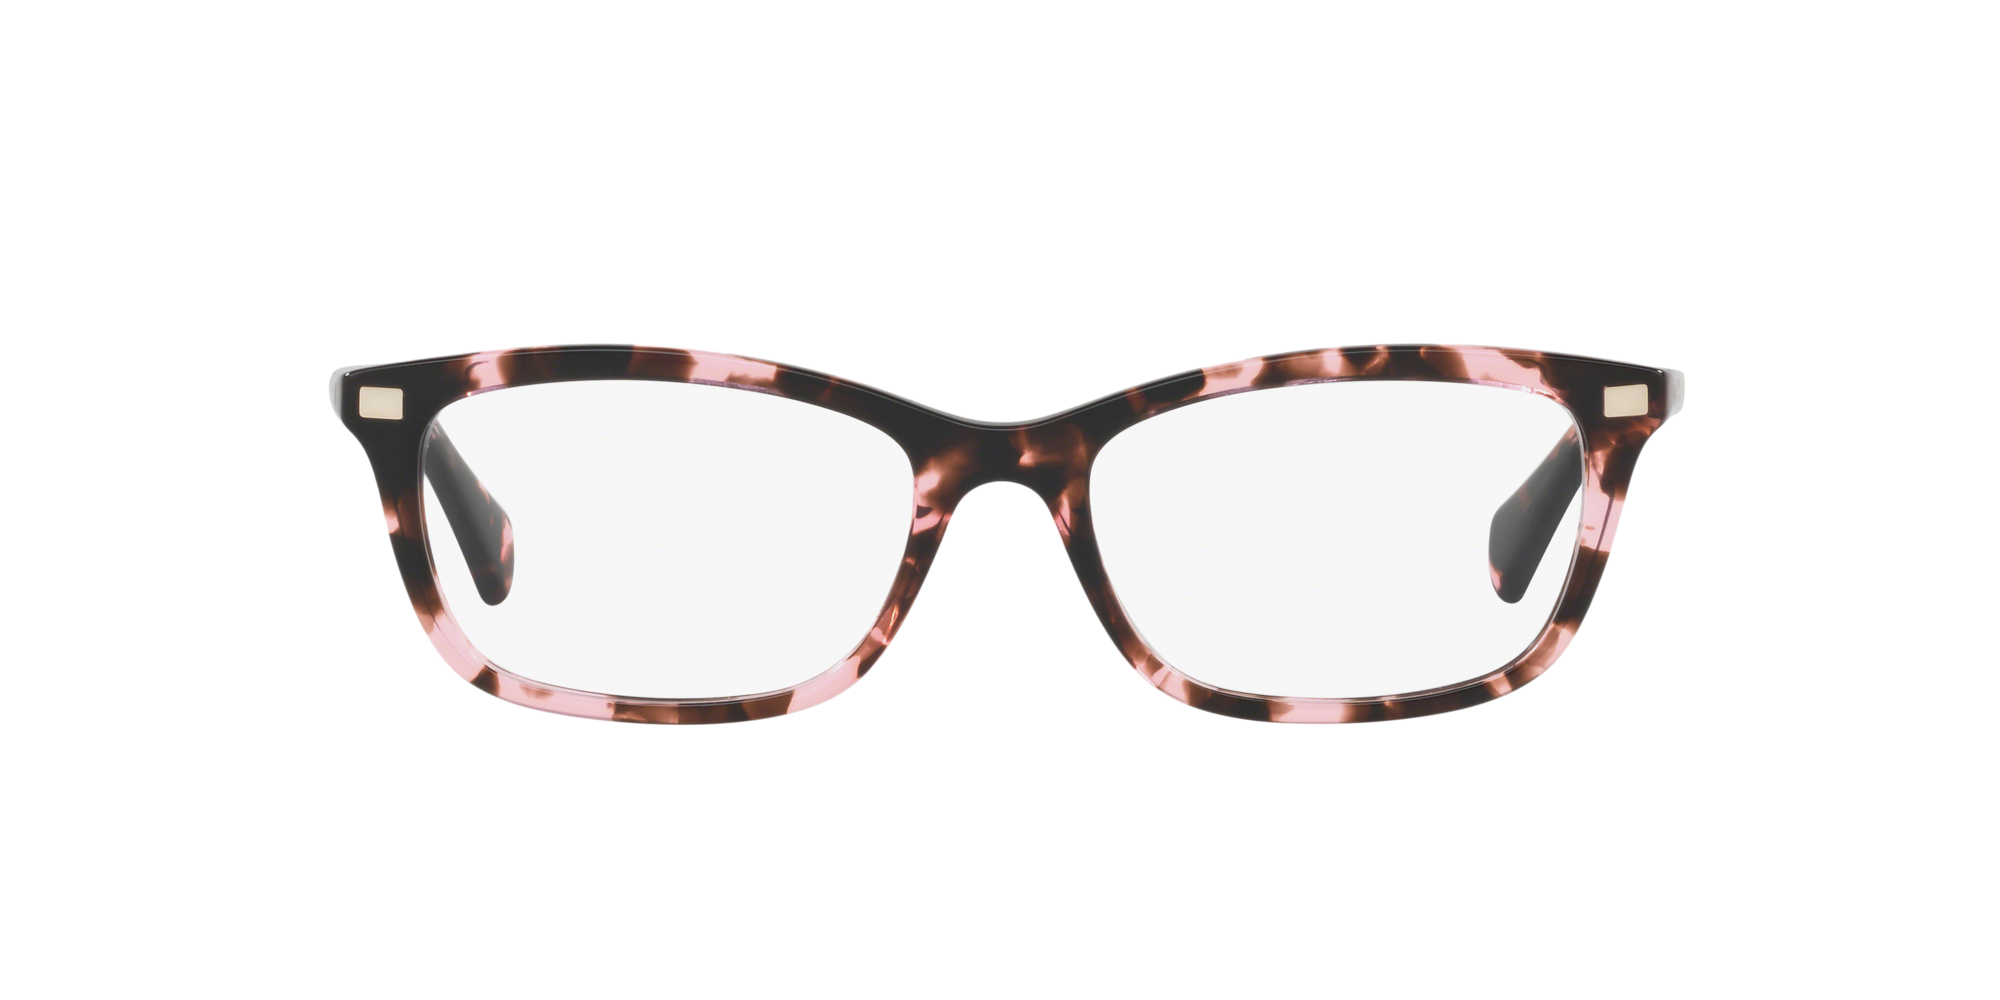 Tortoise glasses | Target Optical